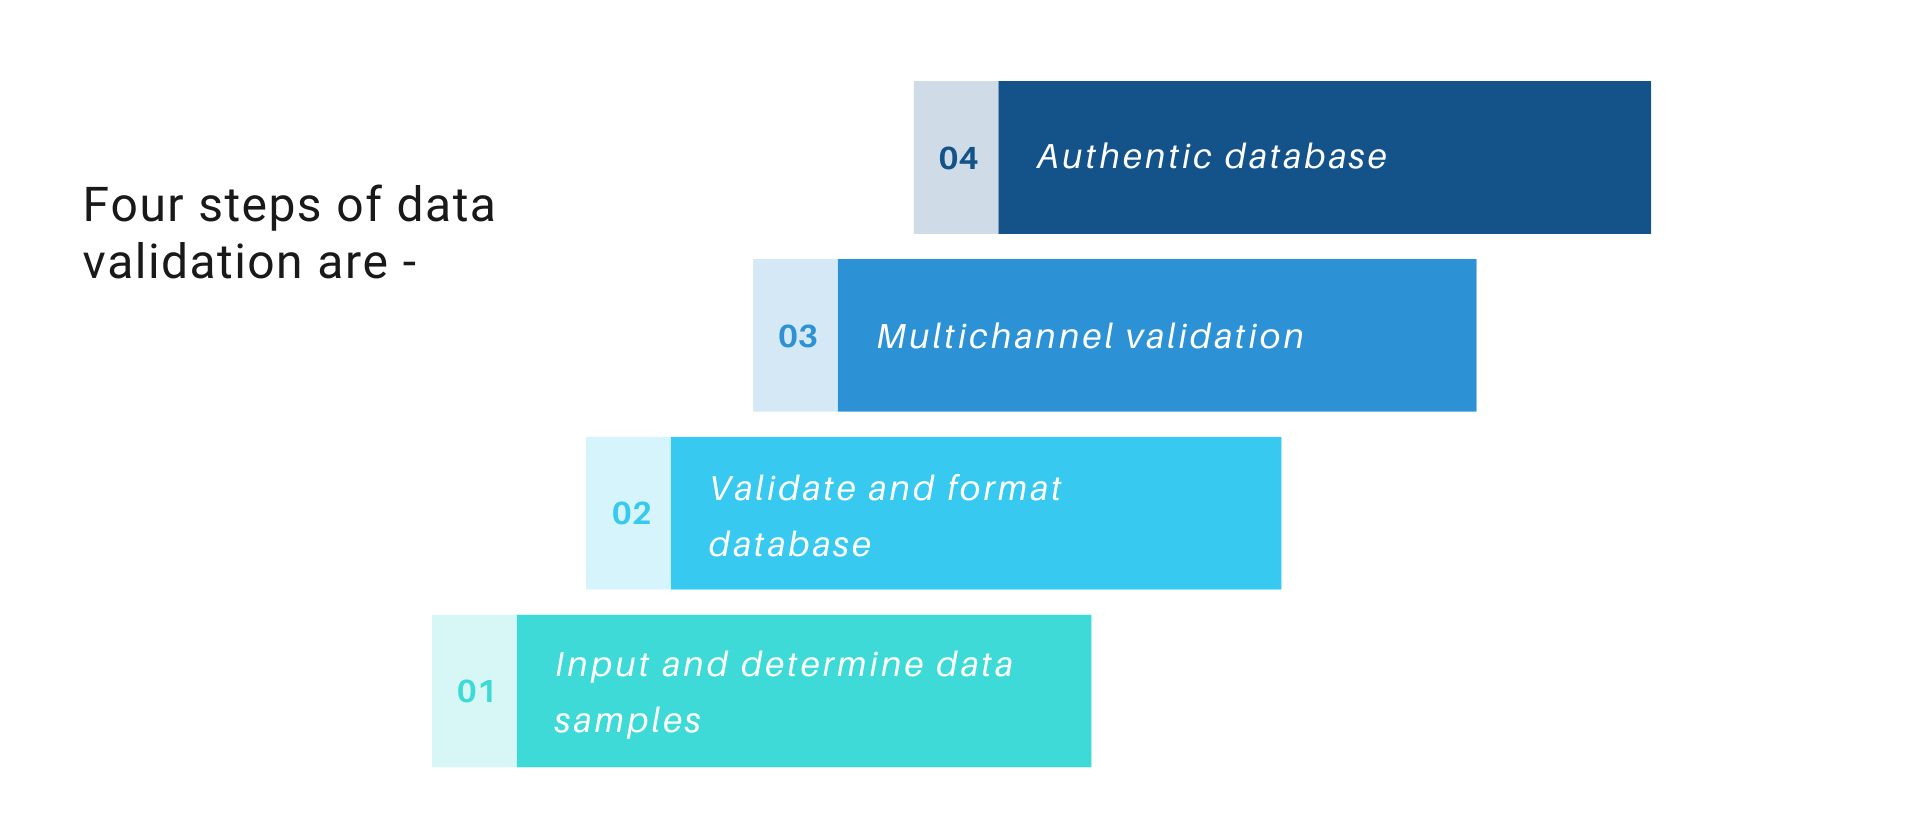 data-validation